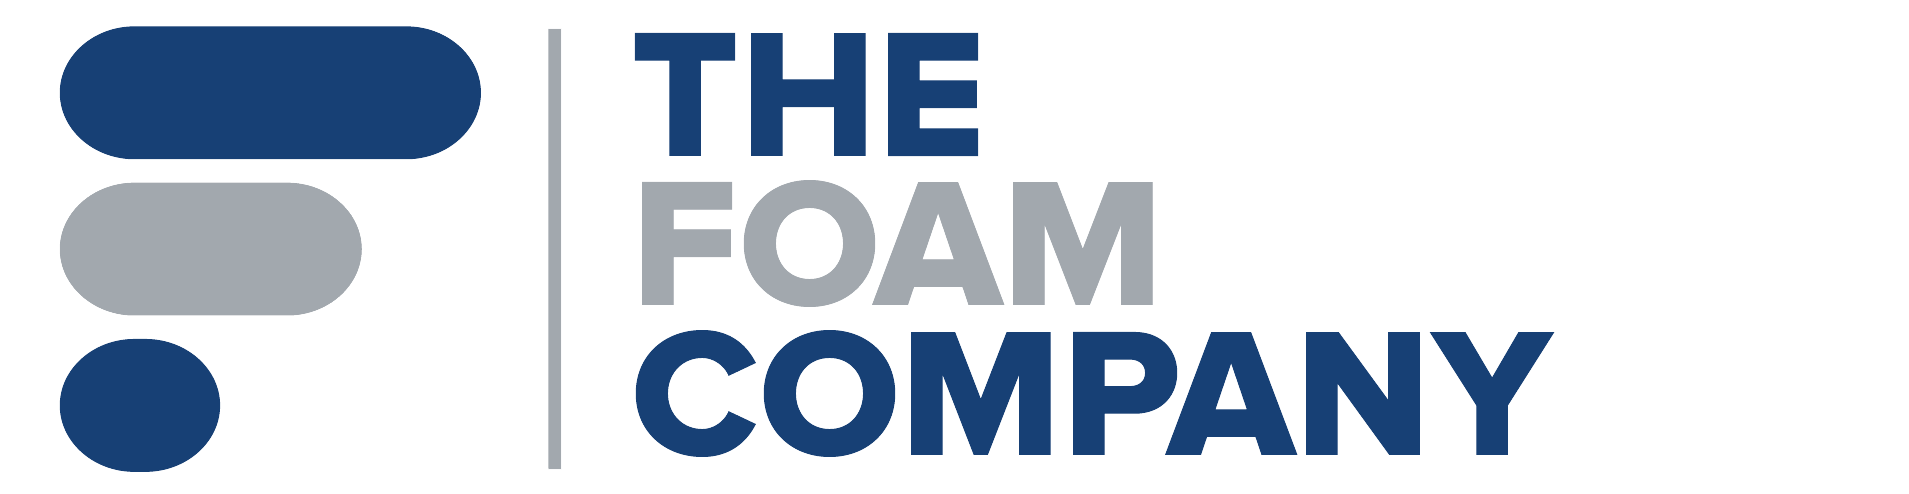 the foam company logo